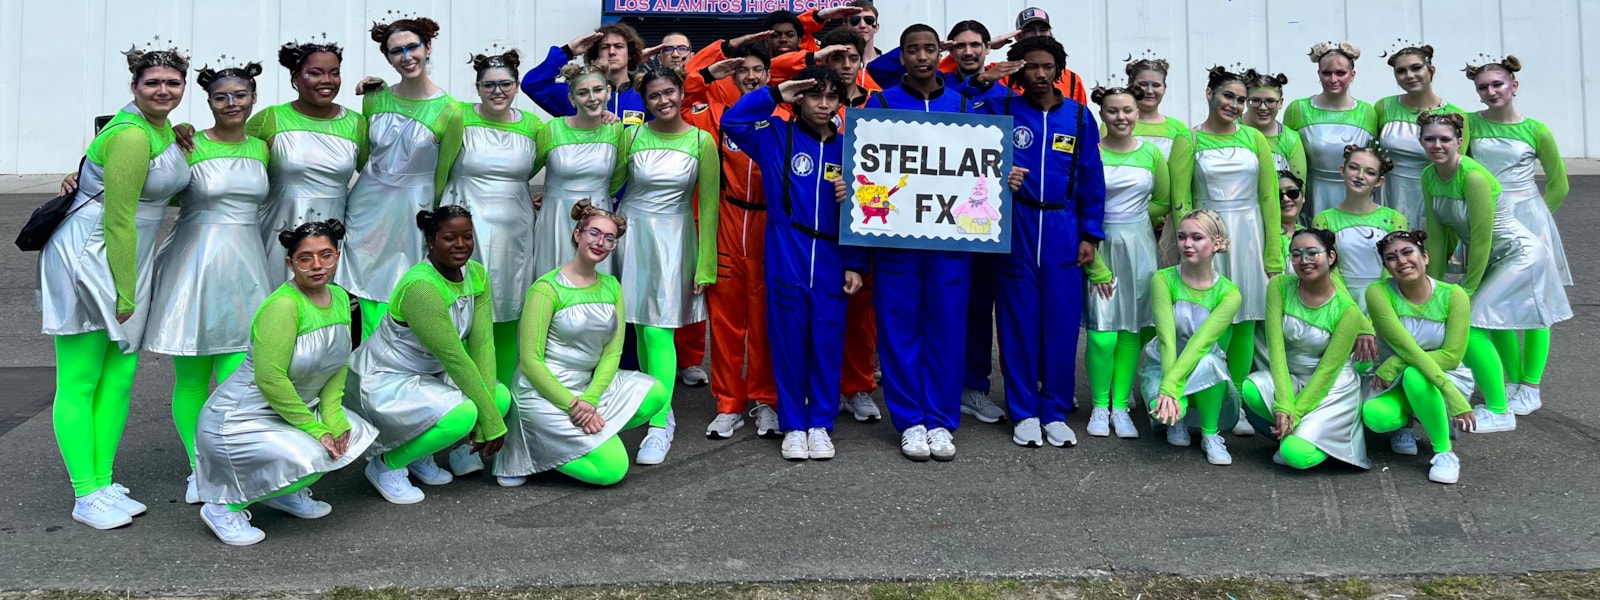 Stellar FX students